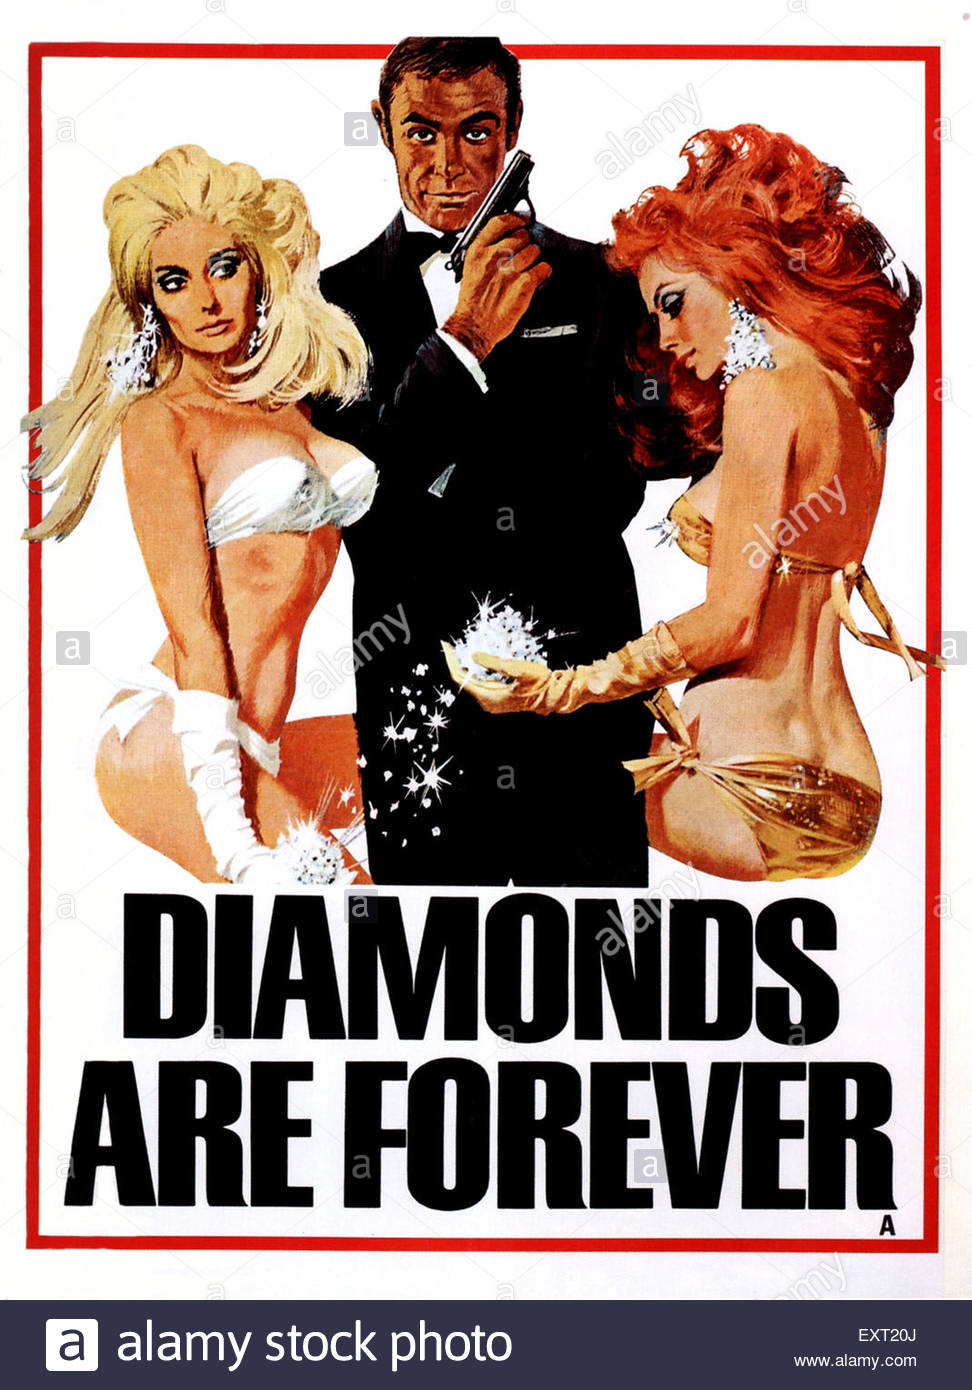 Diamonds Are Forever #22